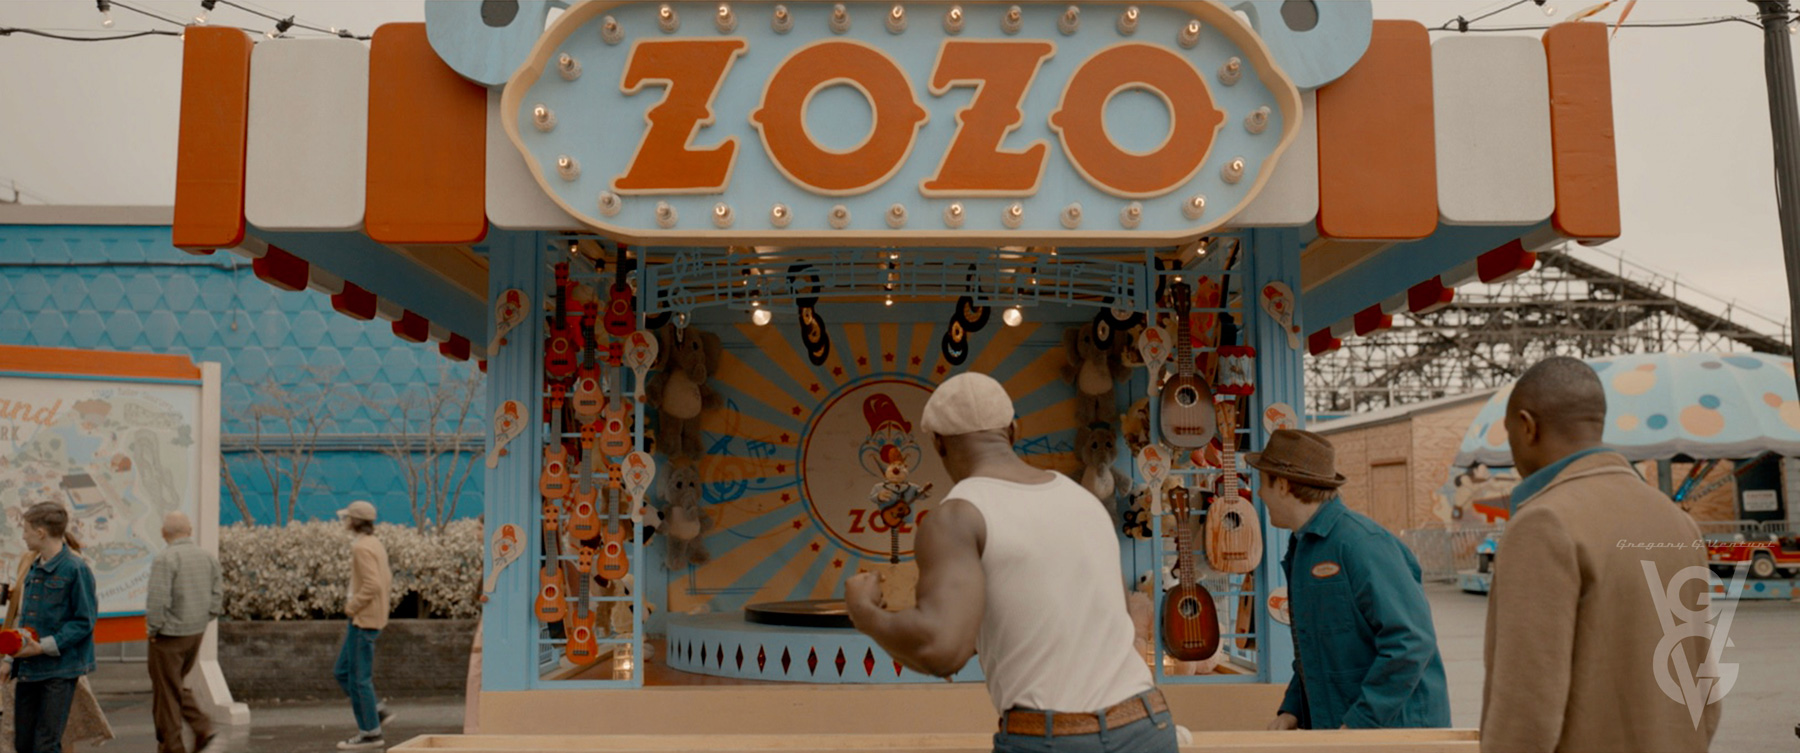 1 Lost Ollie 'Dreamland Amusement Park' Zozo's Ball Toss Booth Location Install Screen Still